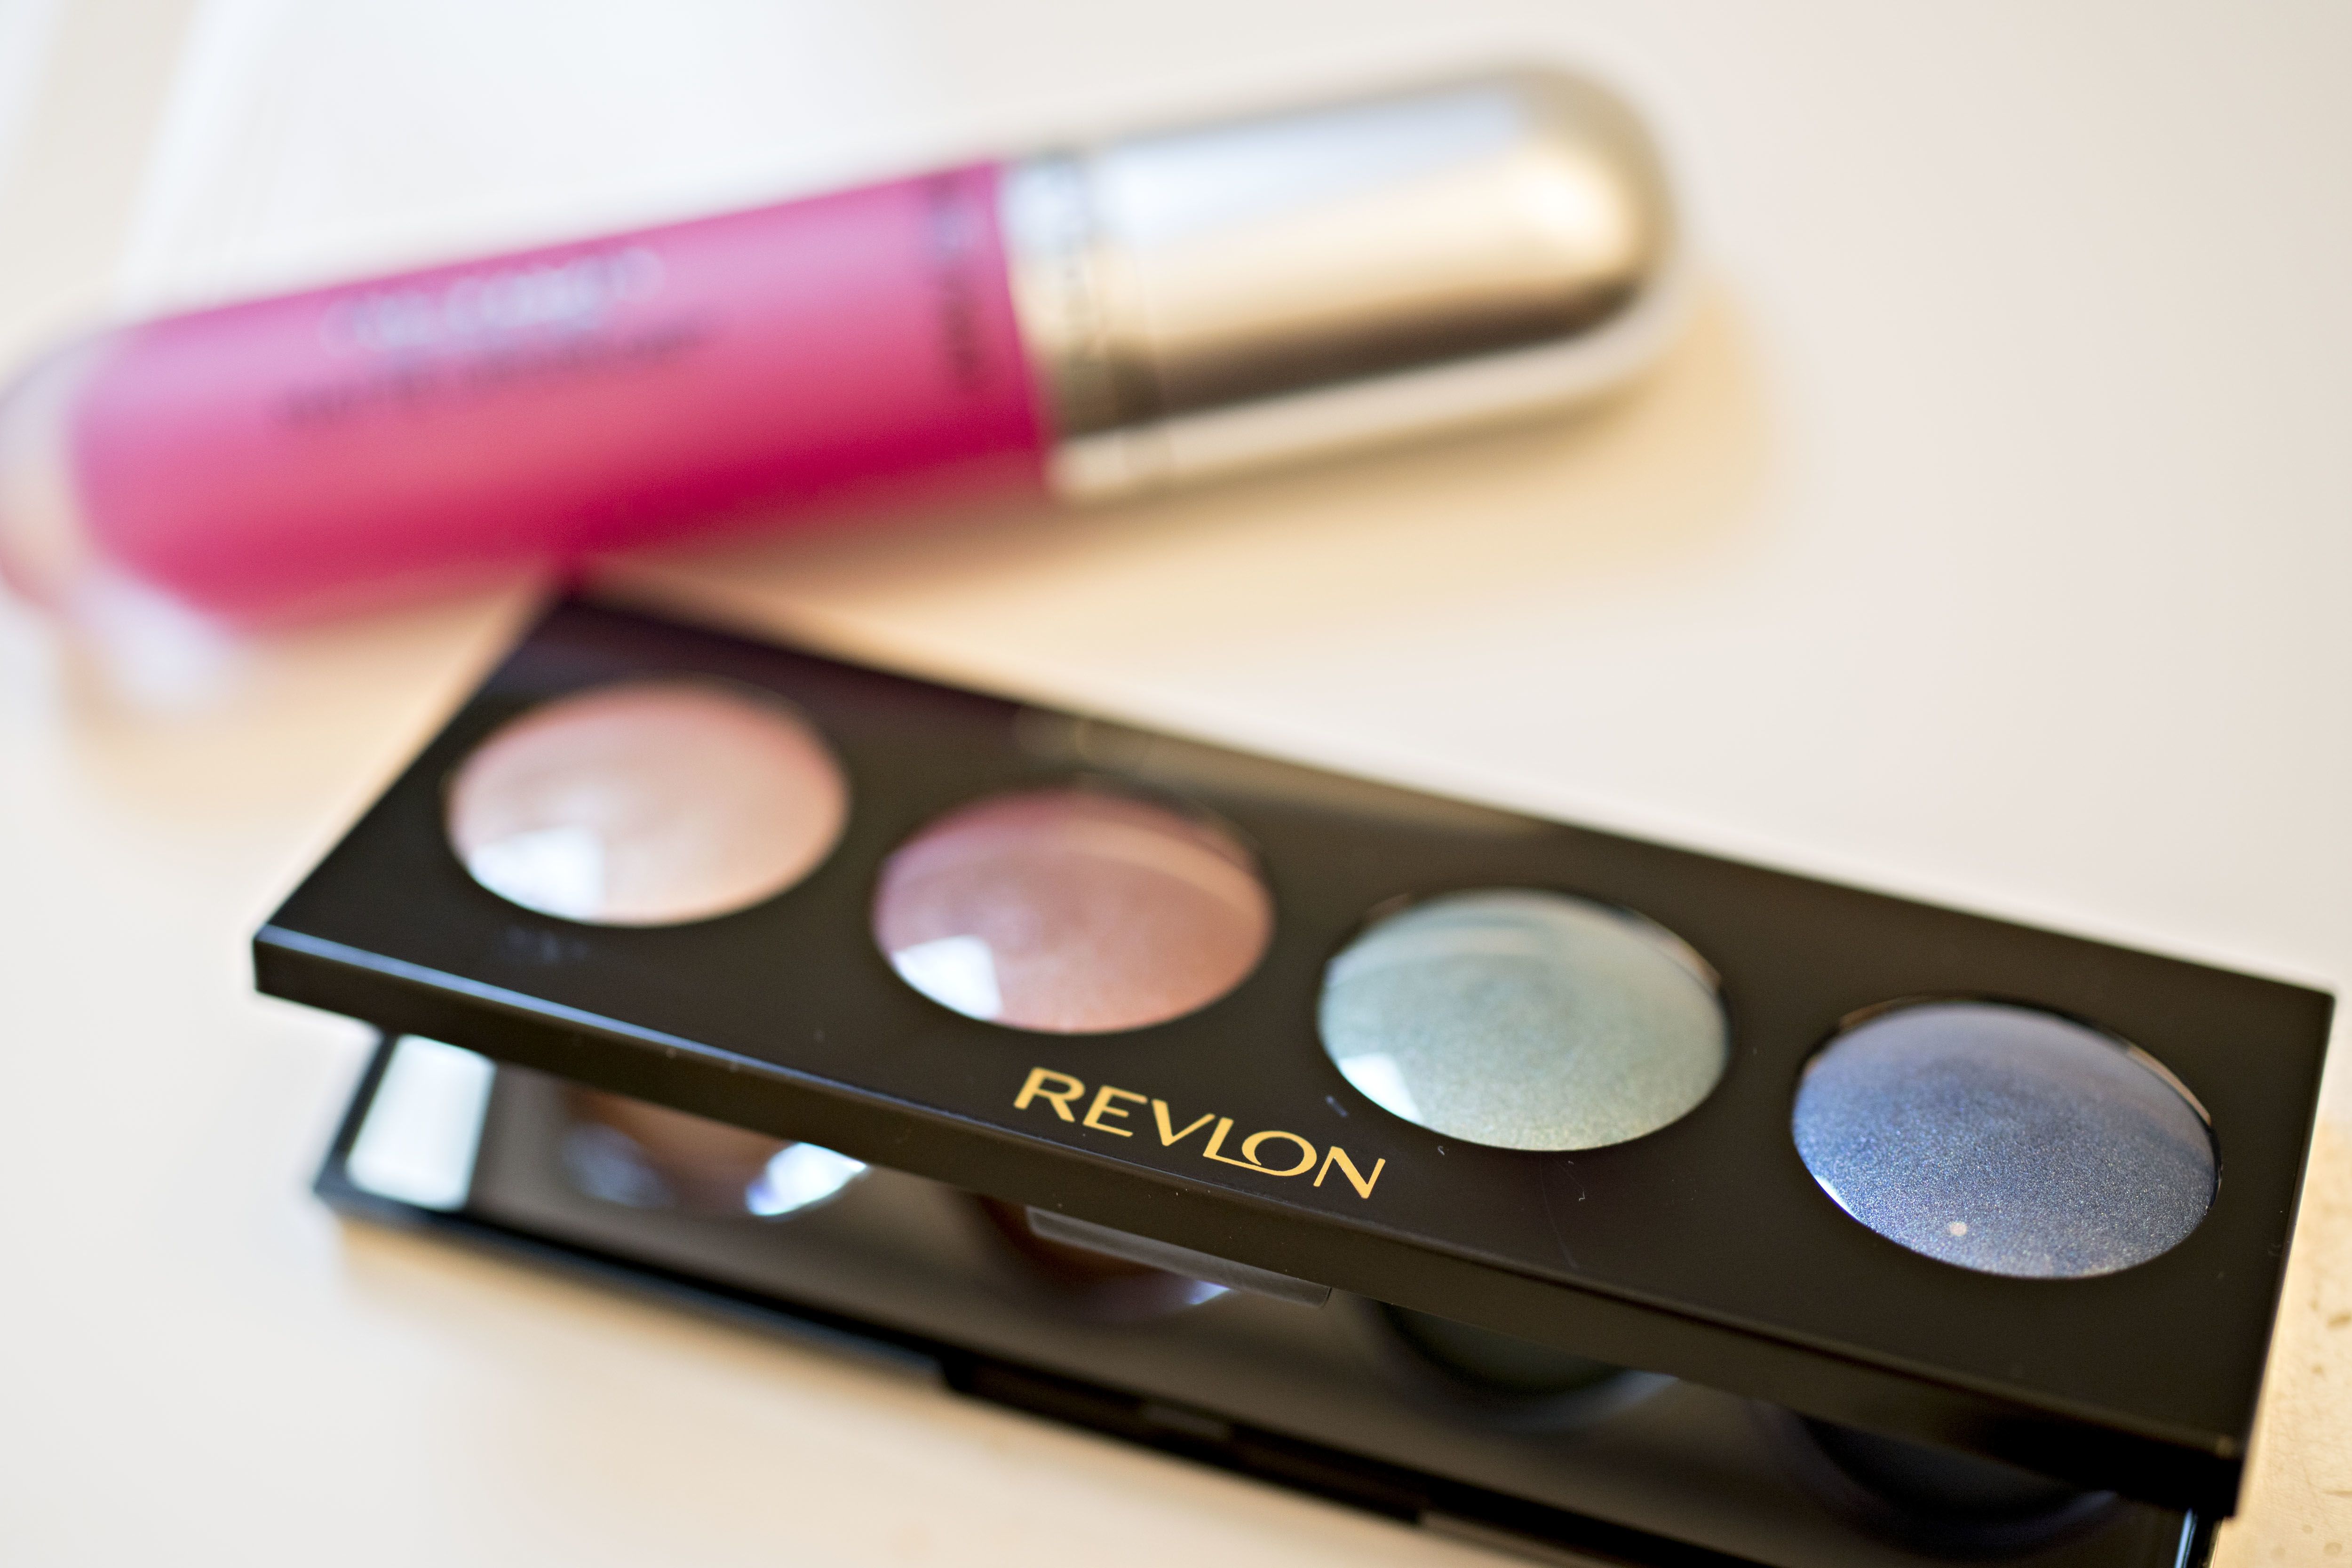 Photo of Revlon products